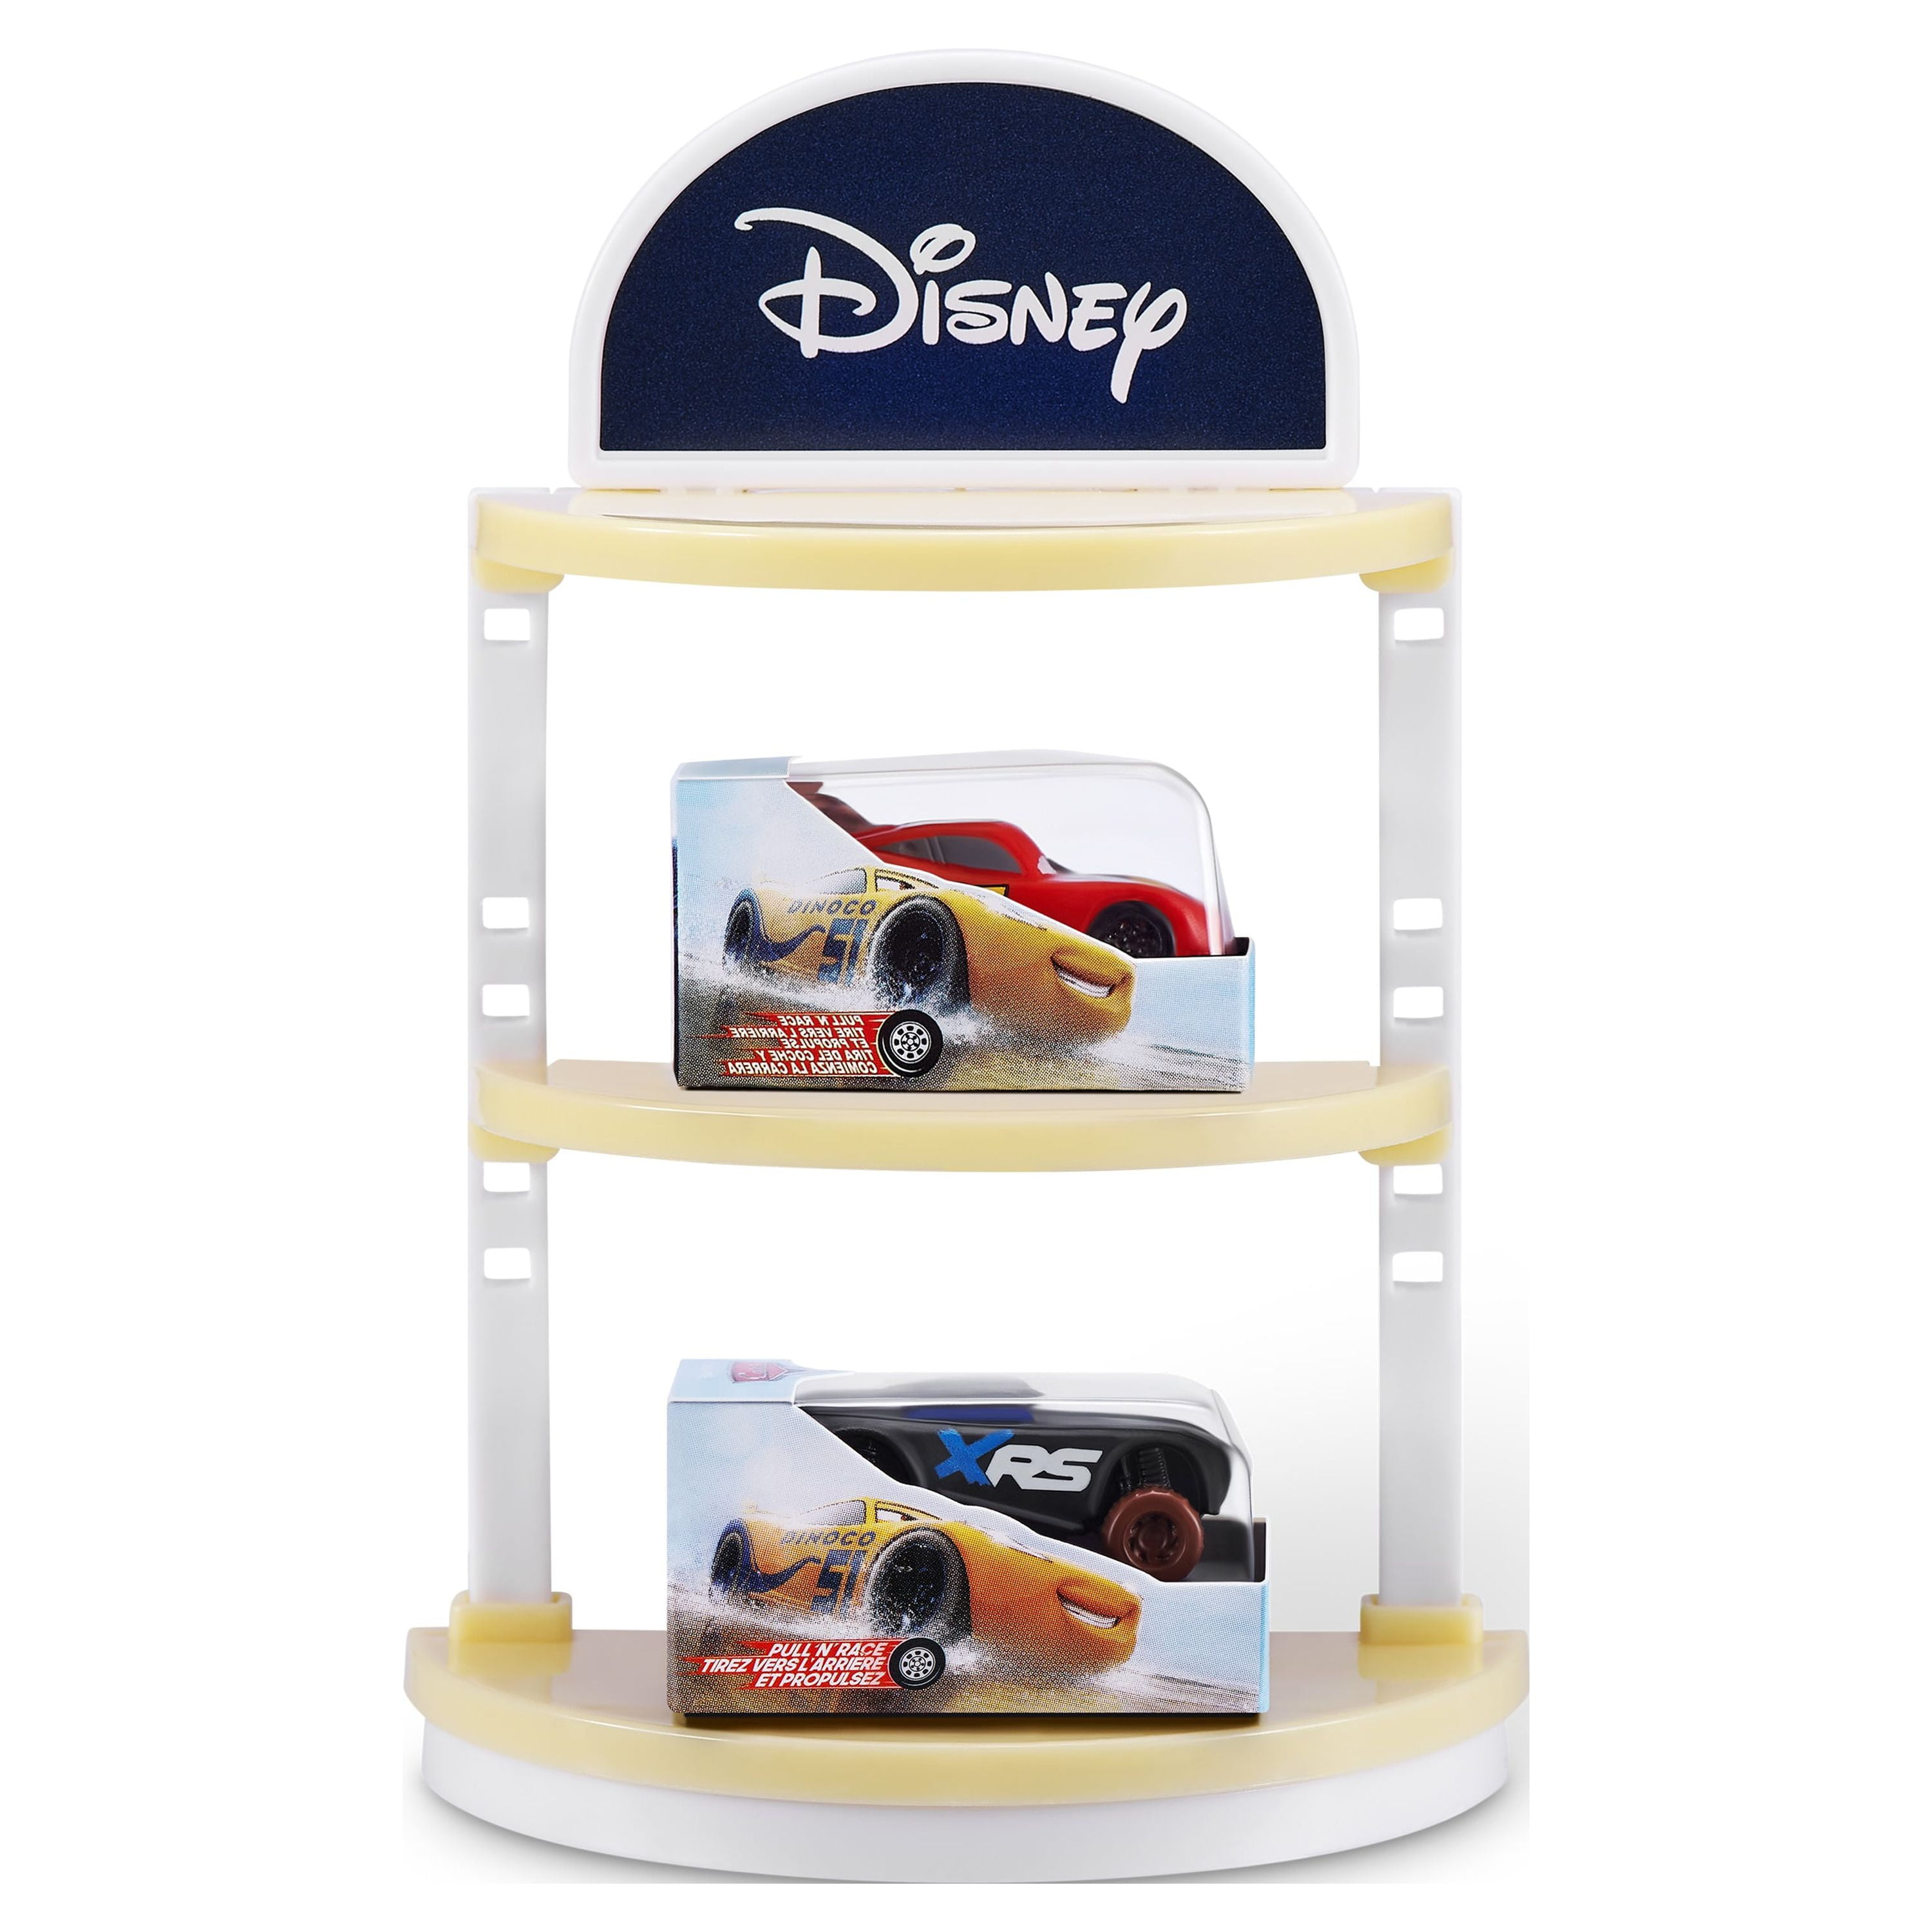 5 Surprise-Disney Store Mini Brands-Series 2 - 77353GQ2